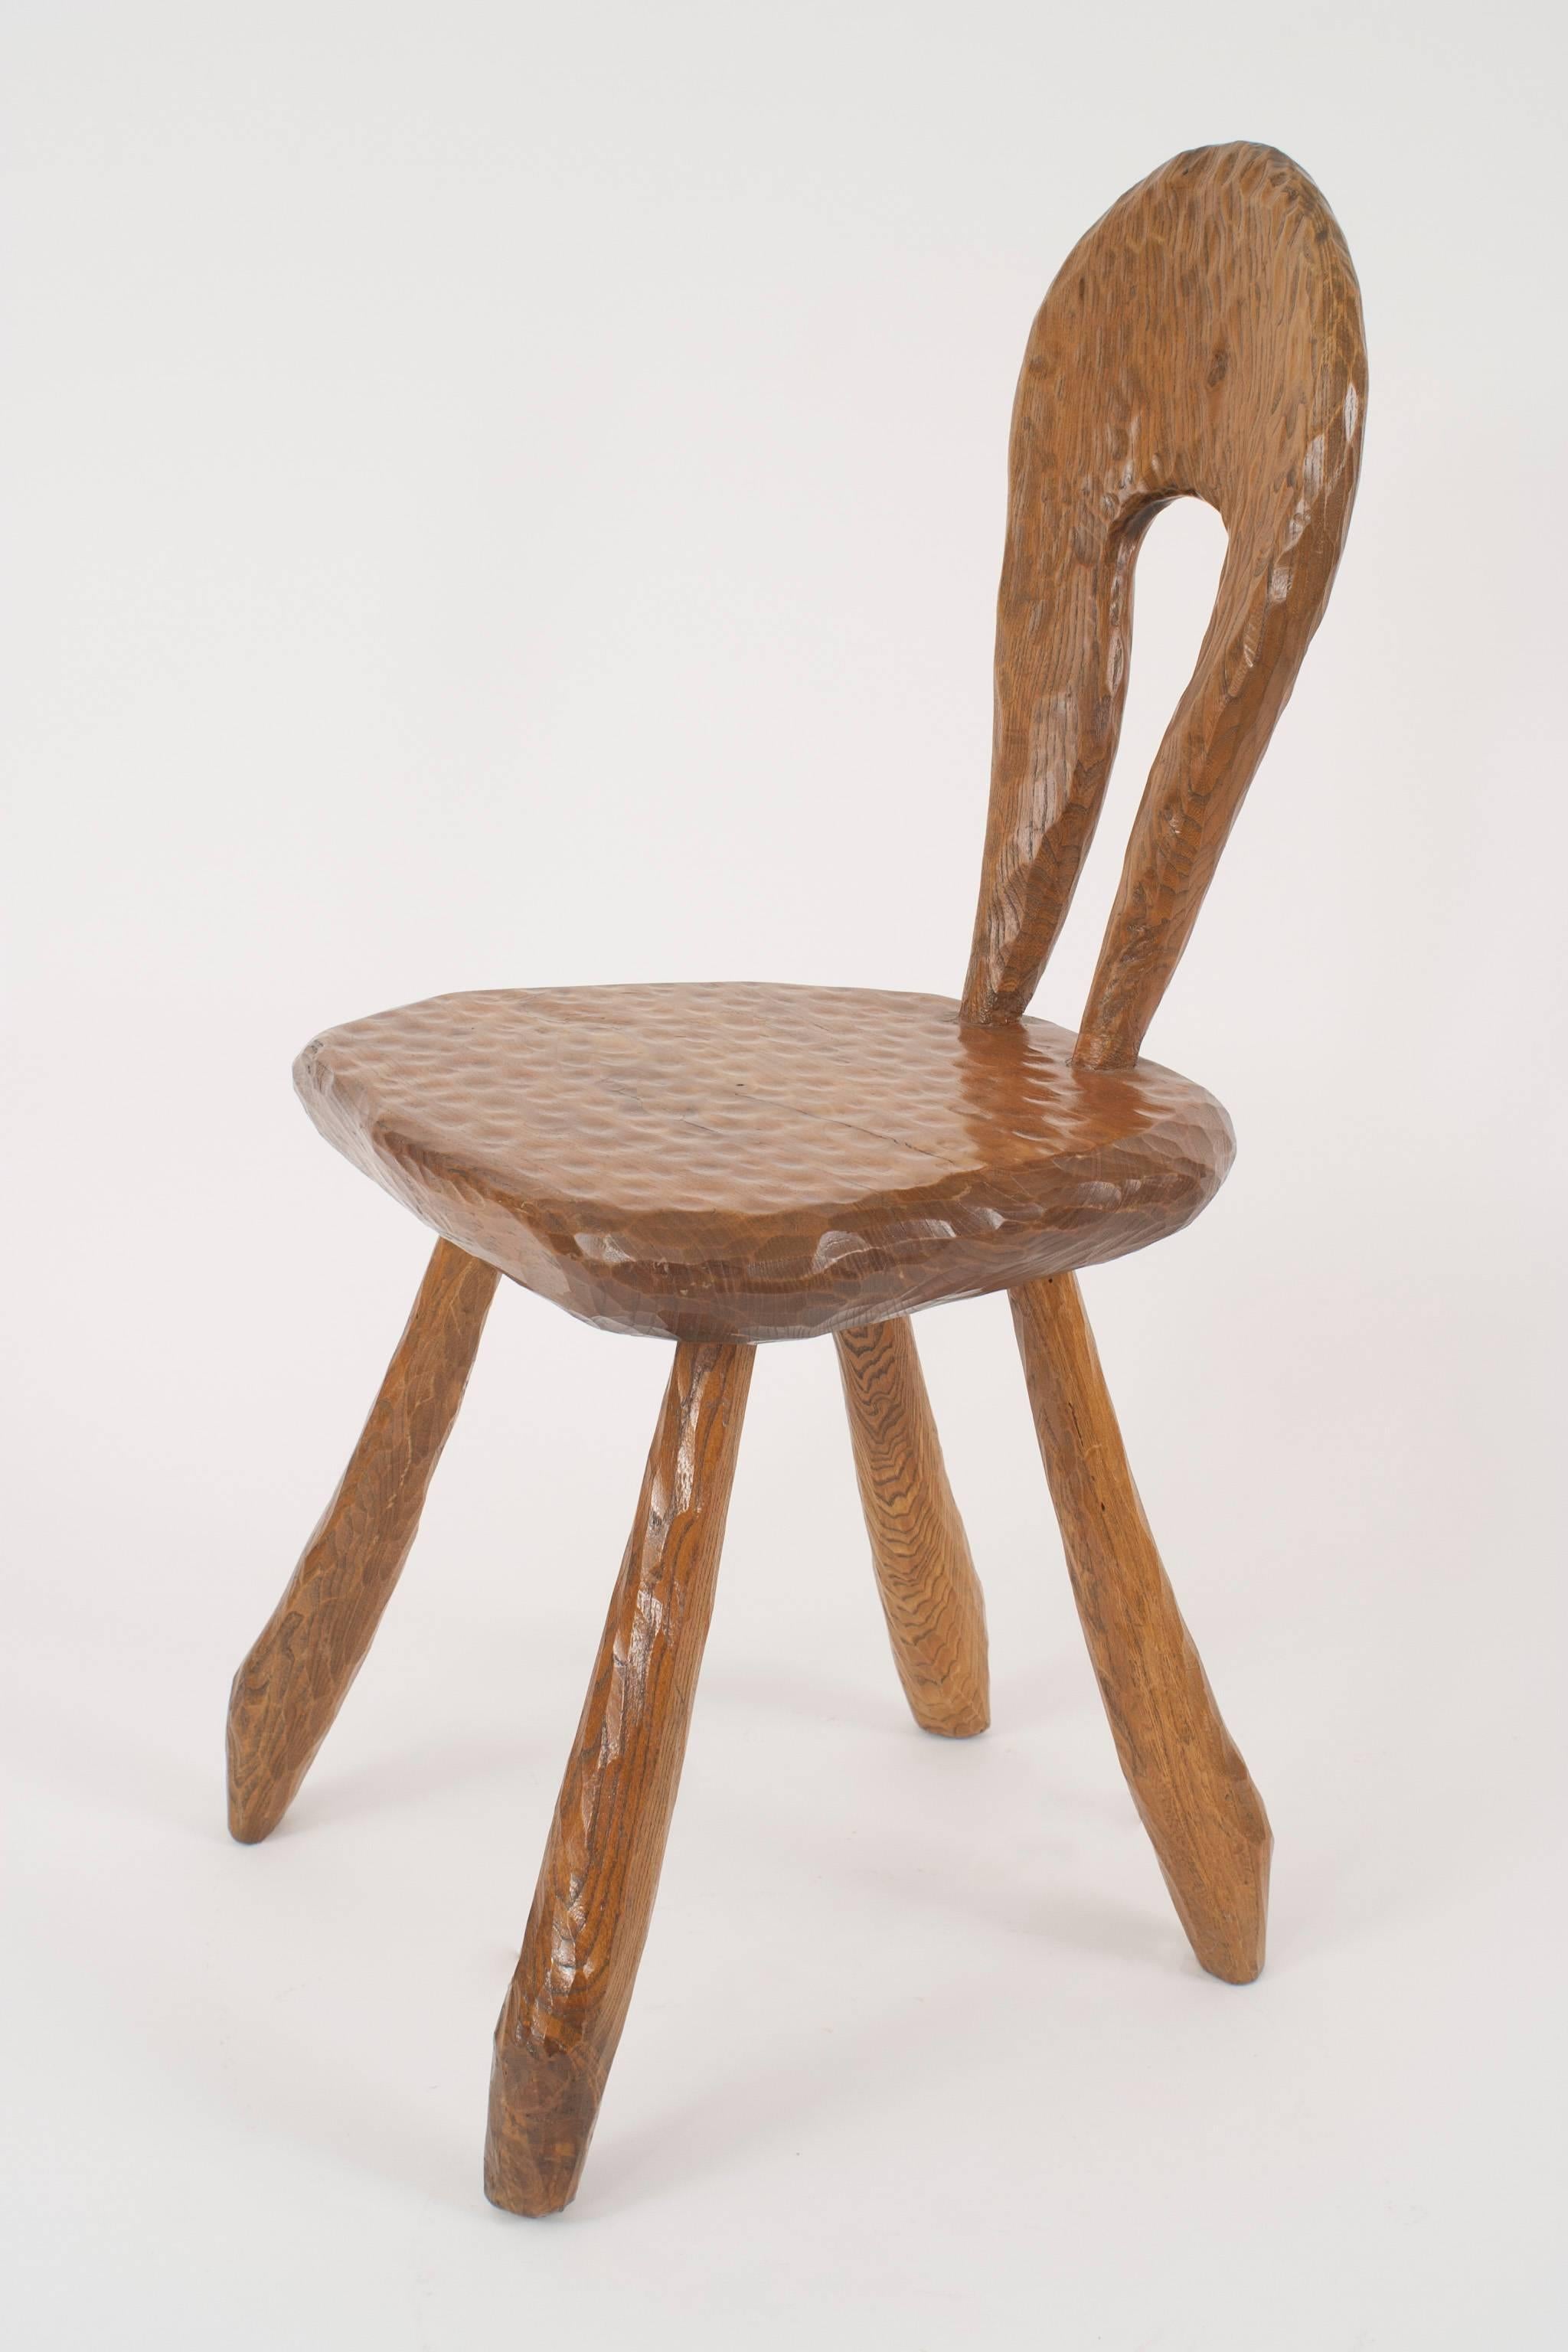 rustic adirondack chairs